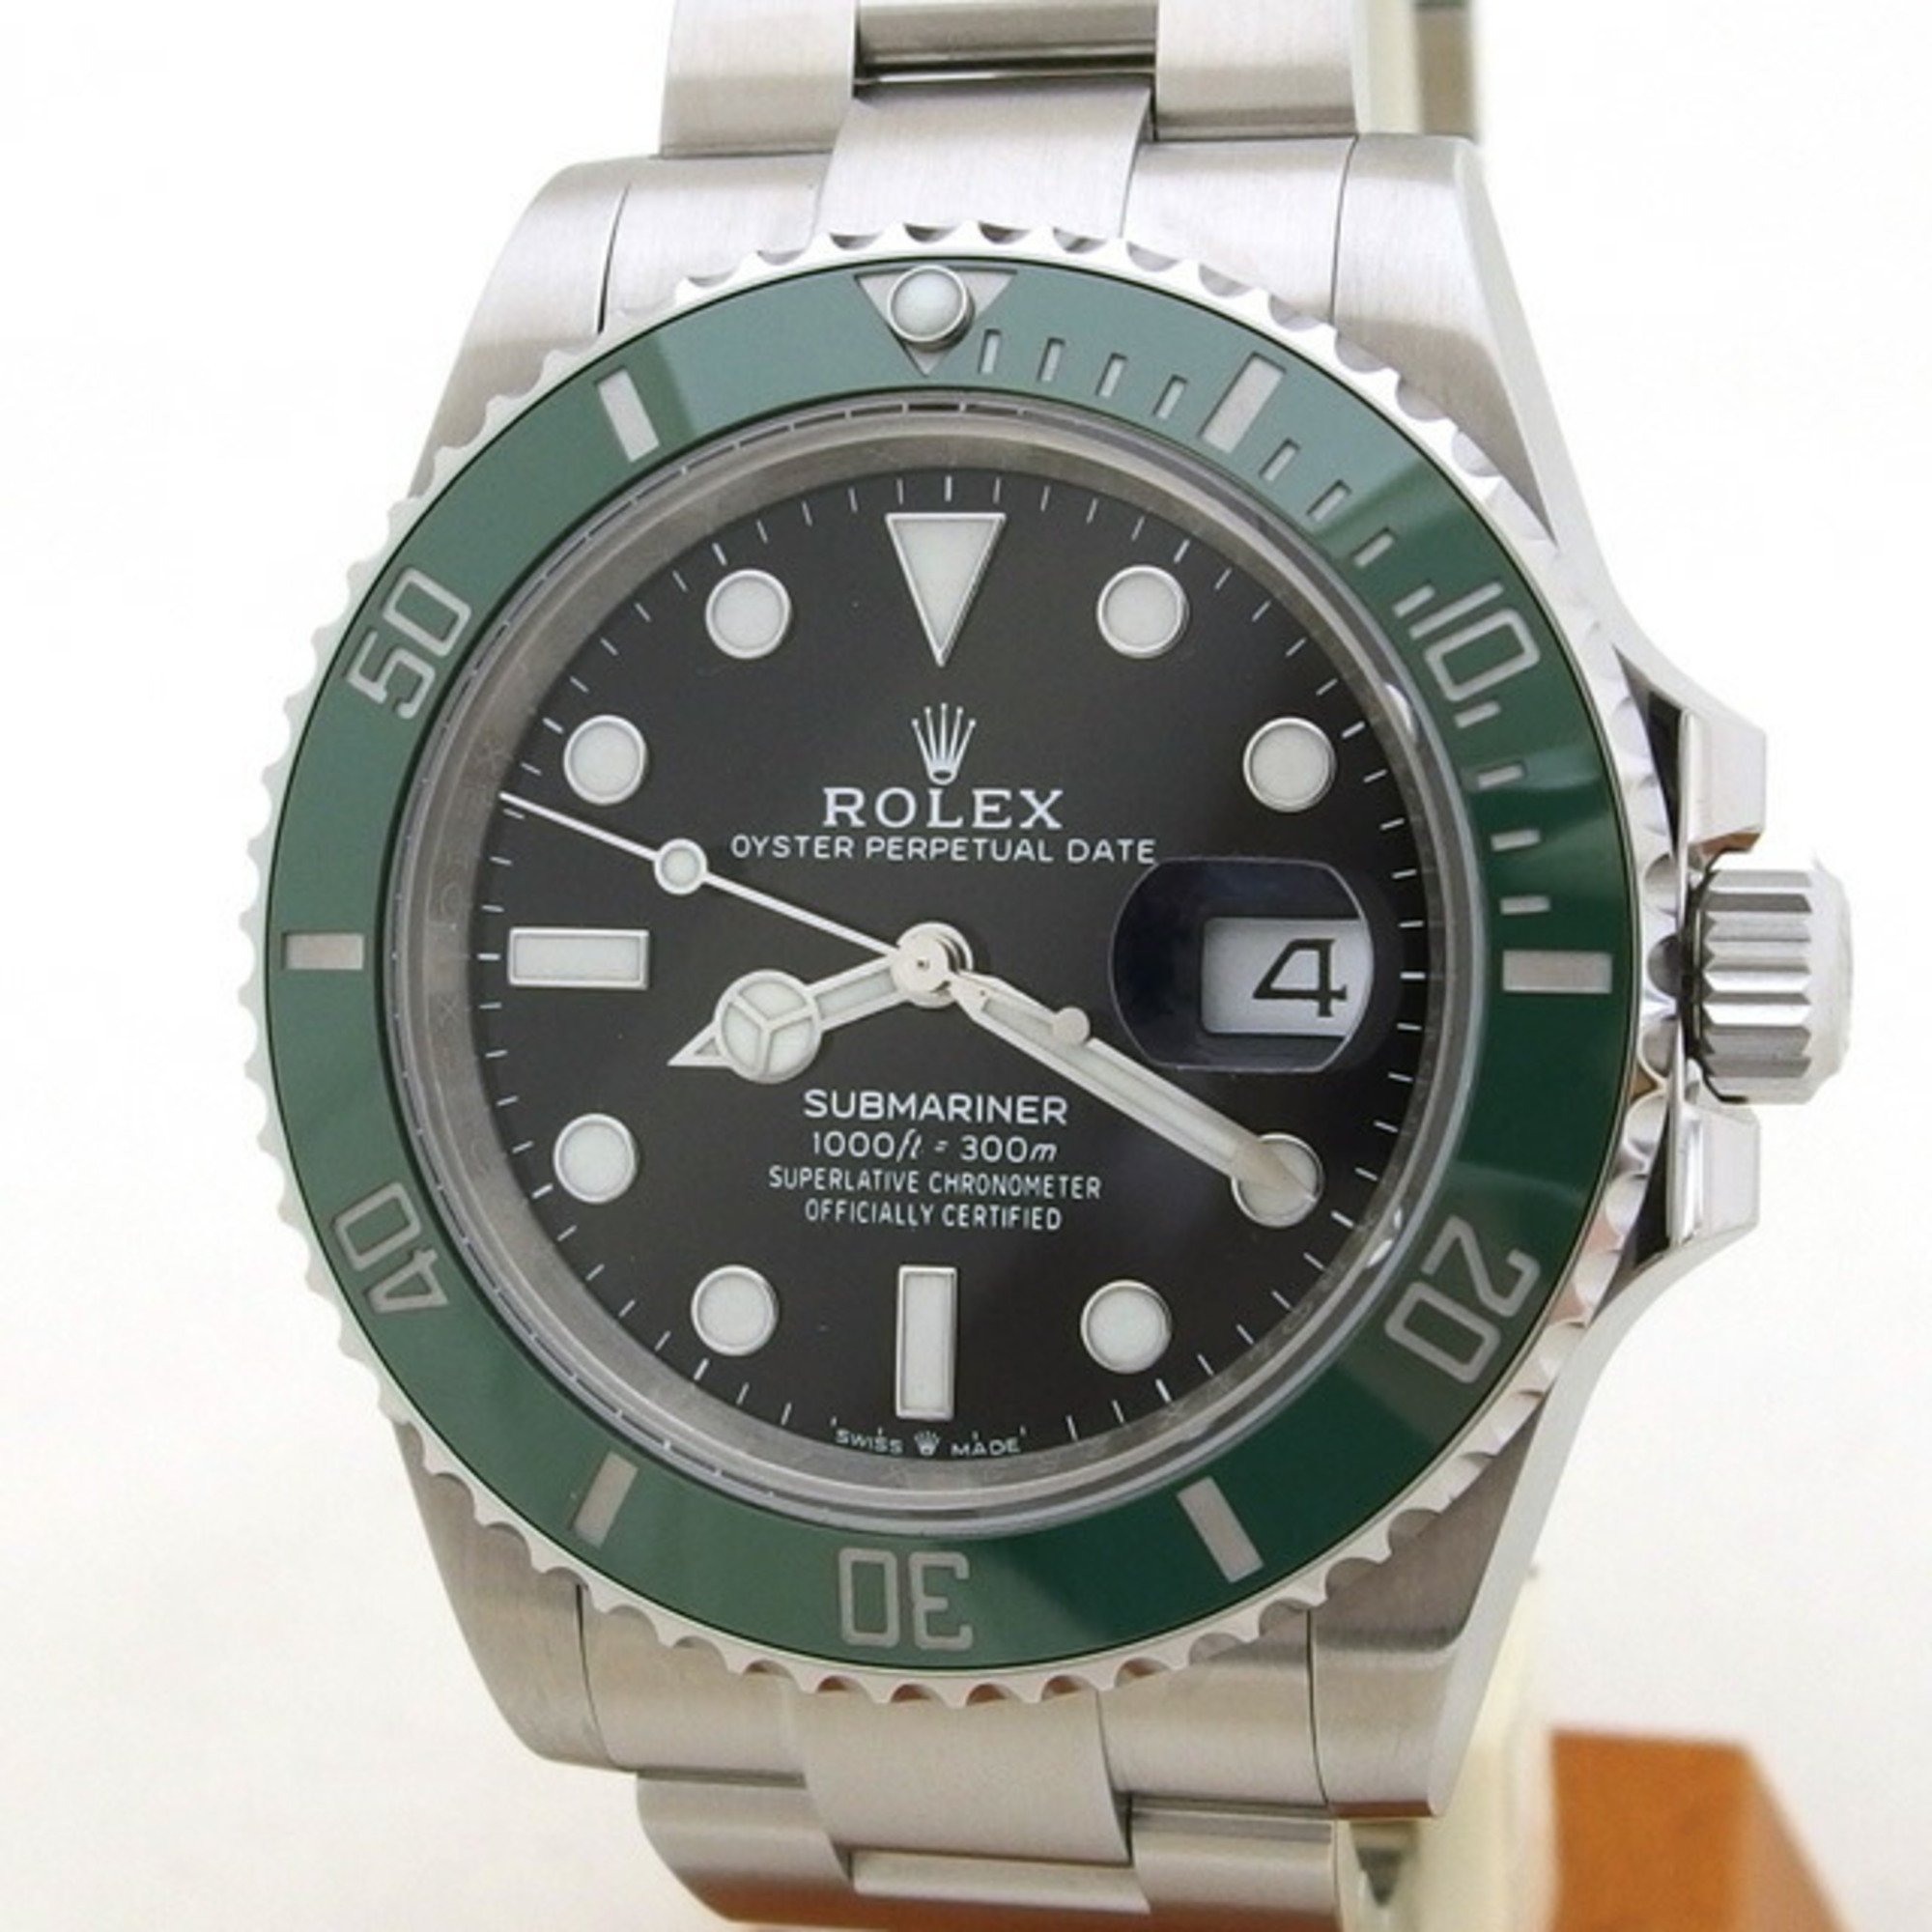 Rolex Submariner Date 126610LV green bezel black dial watch